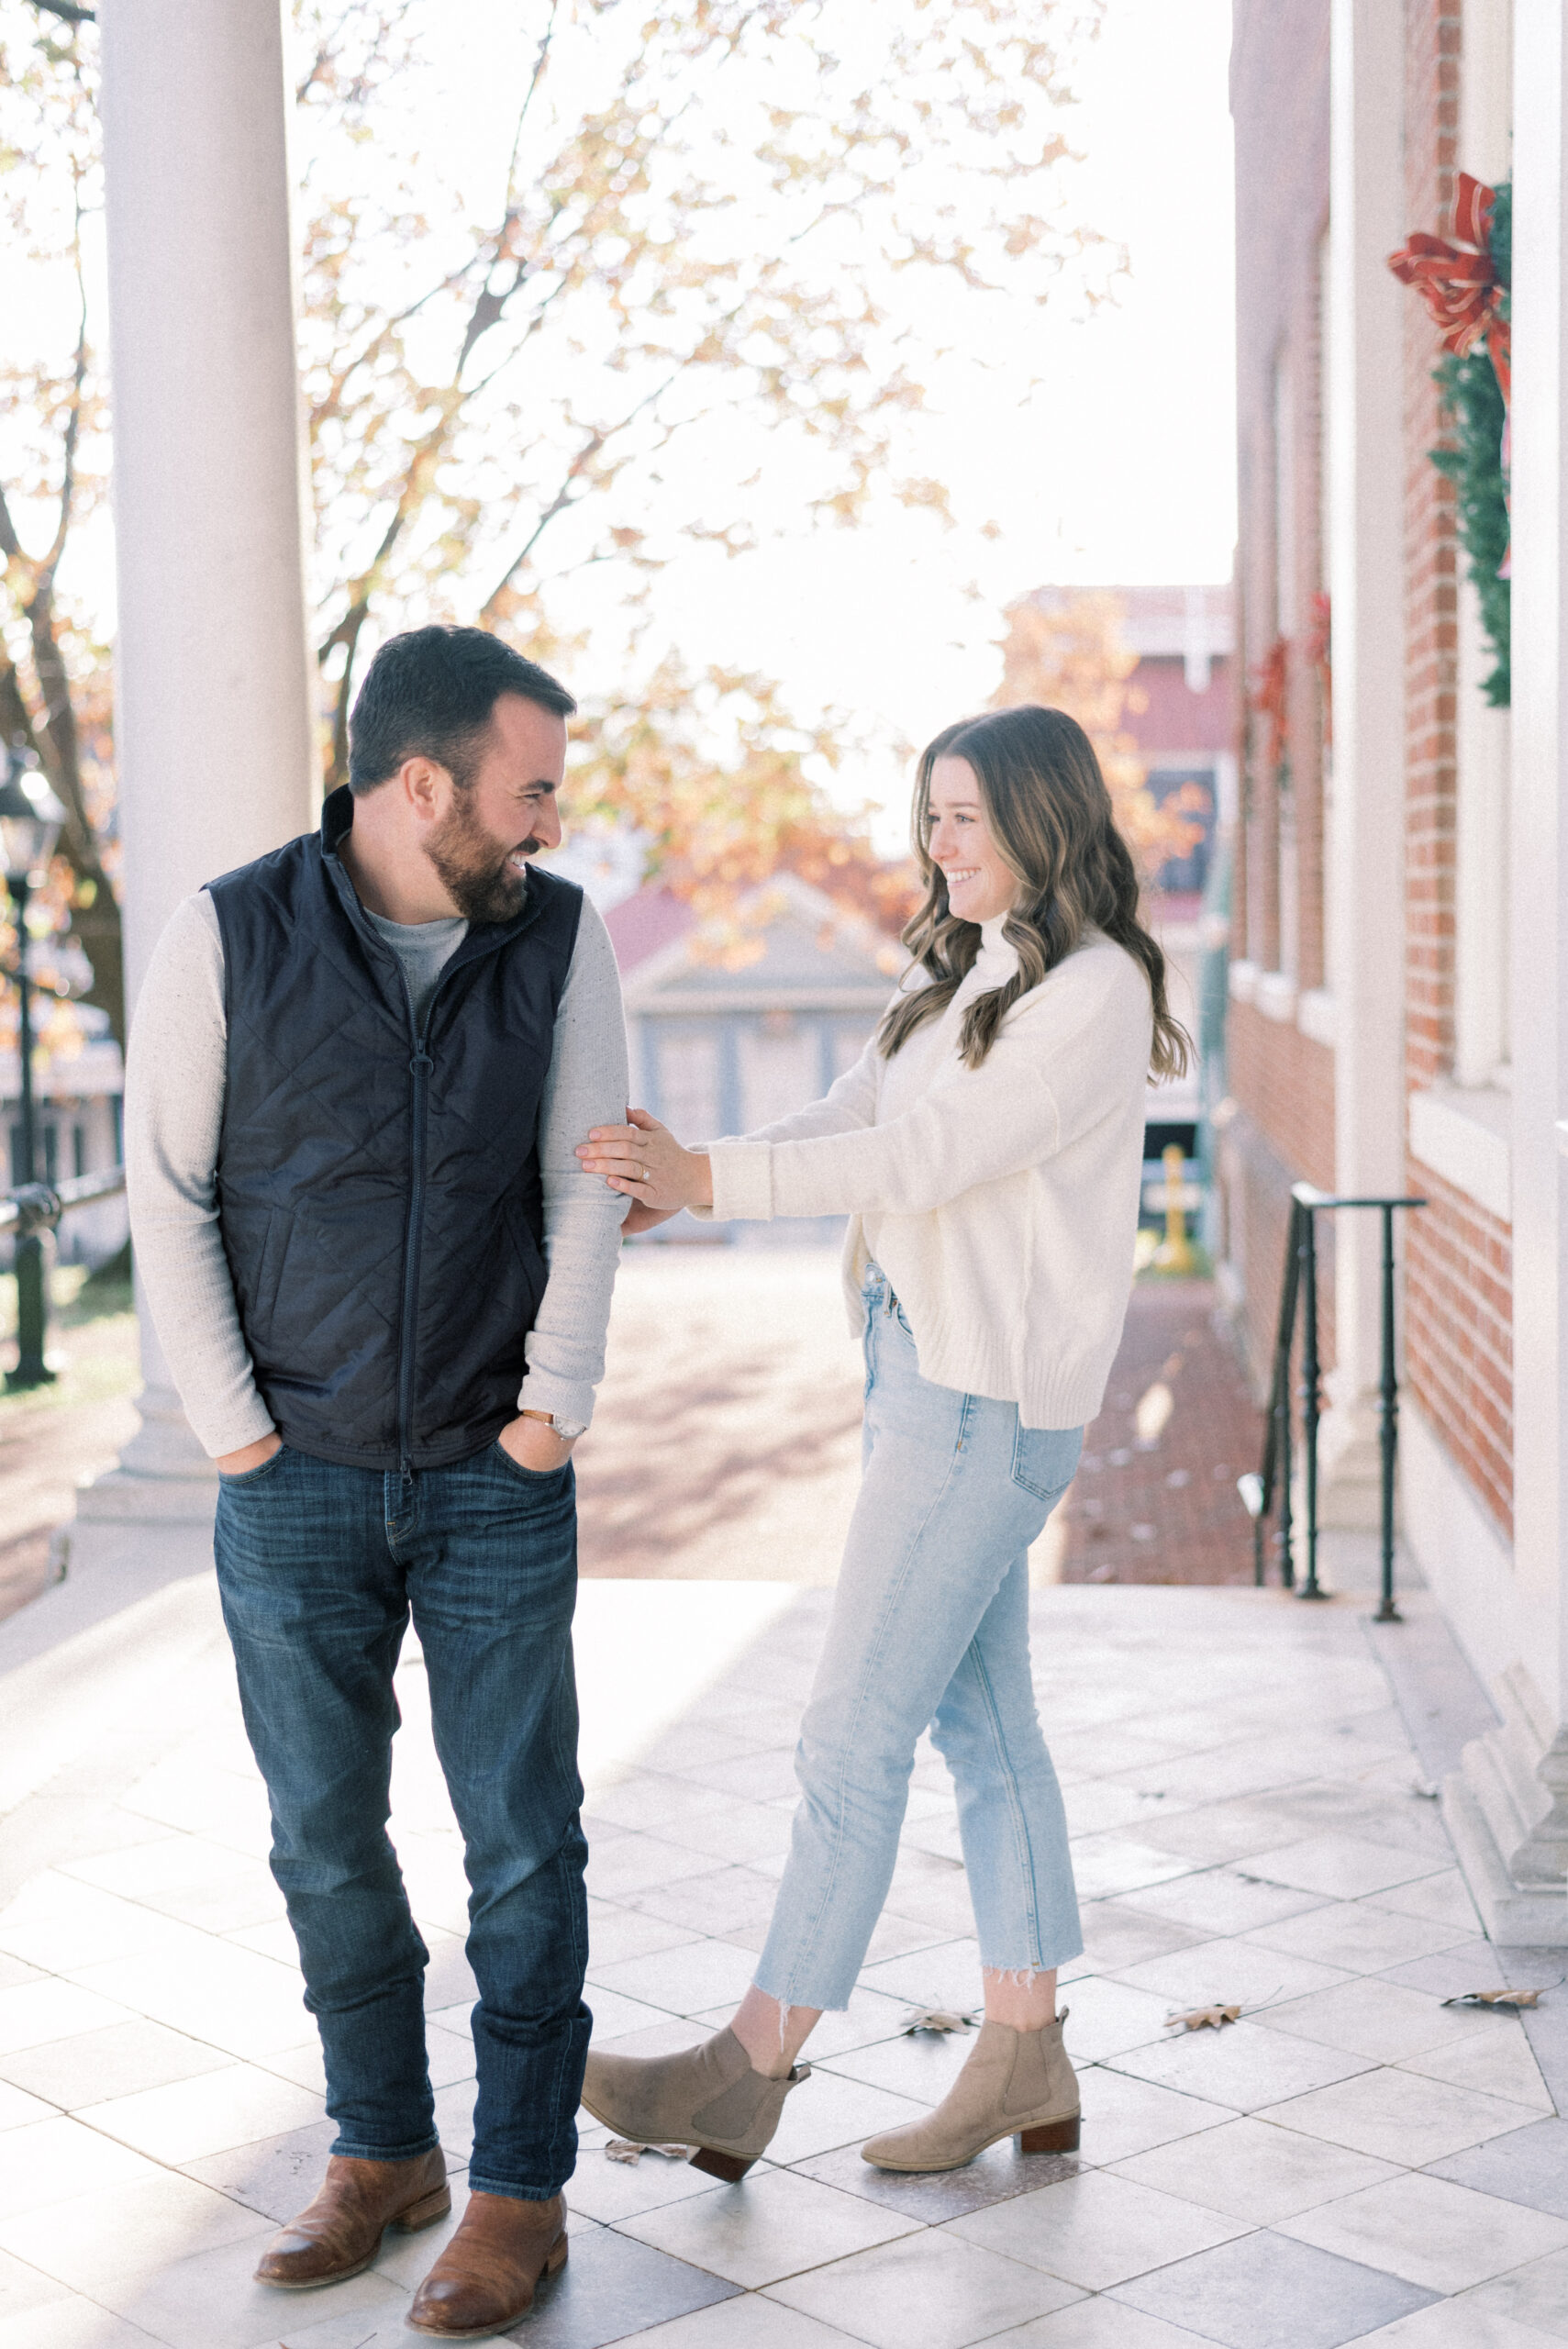 Maryland wedding photographer captures couple joking together during outdoor engagement portraits